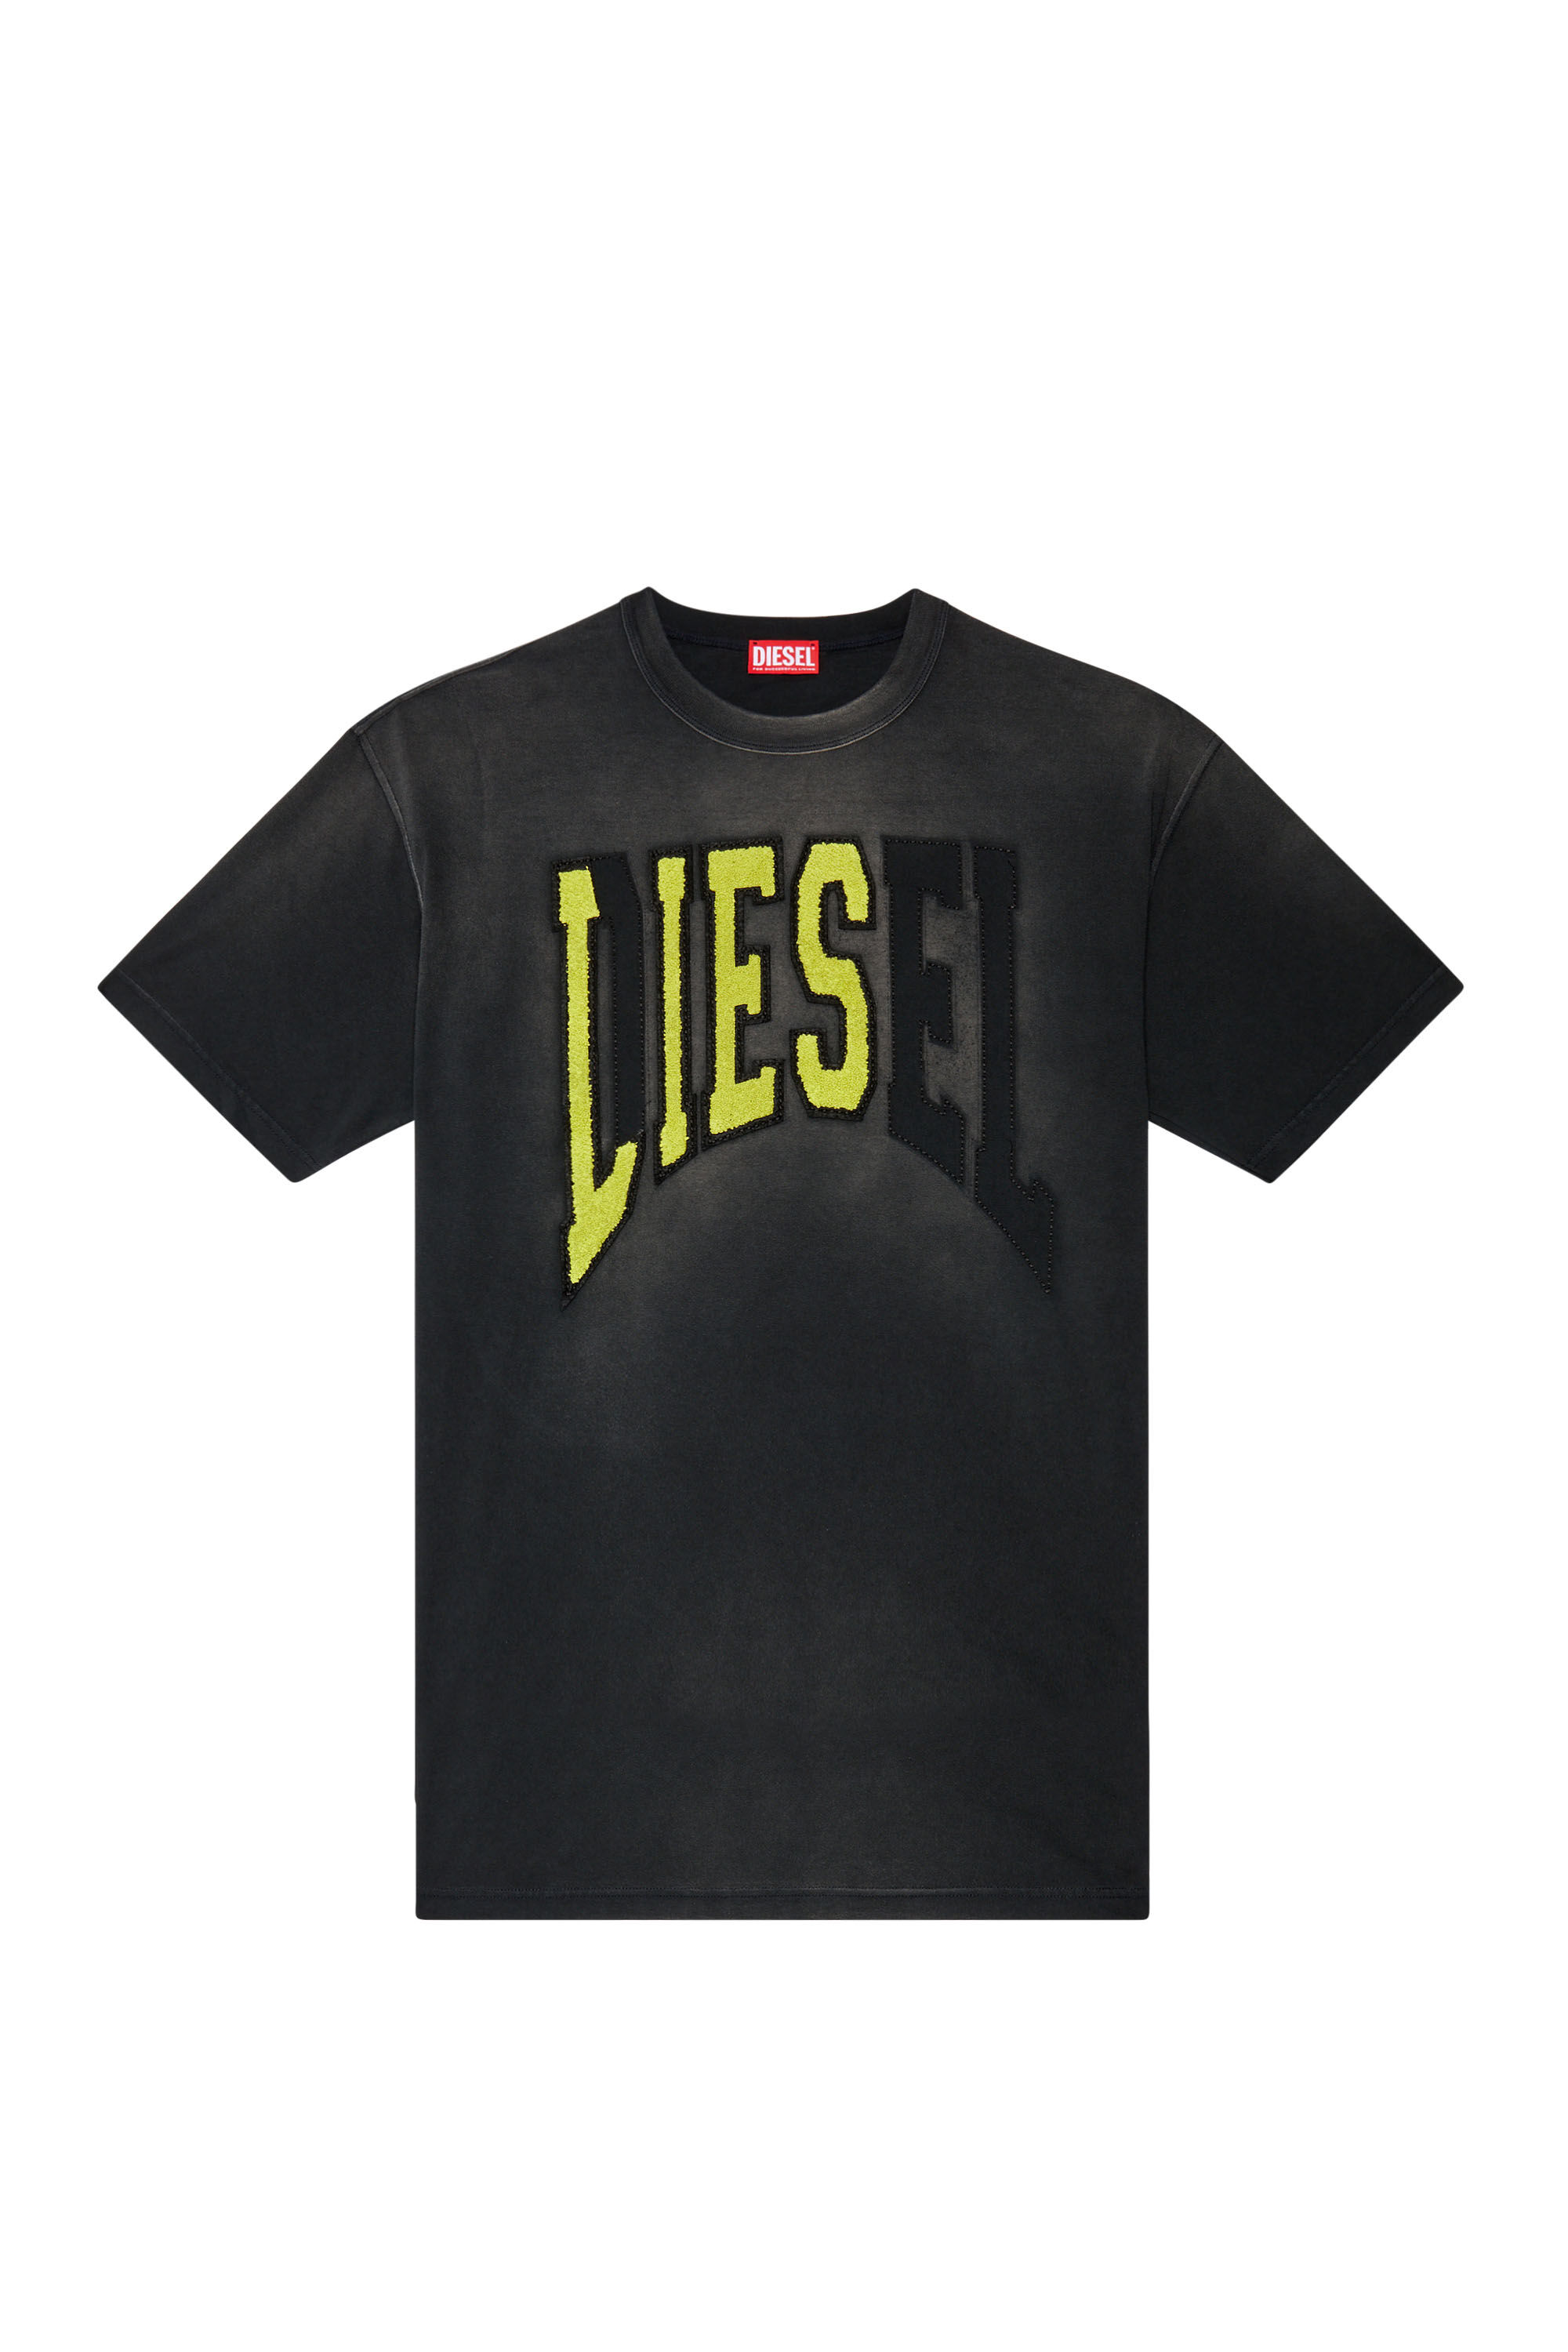 Diesel - T-WASH-N, Hombre Camiseta extragrande con logotipo Diesel Lies in Negro - Image 2